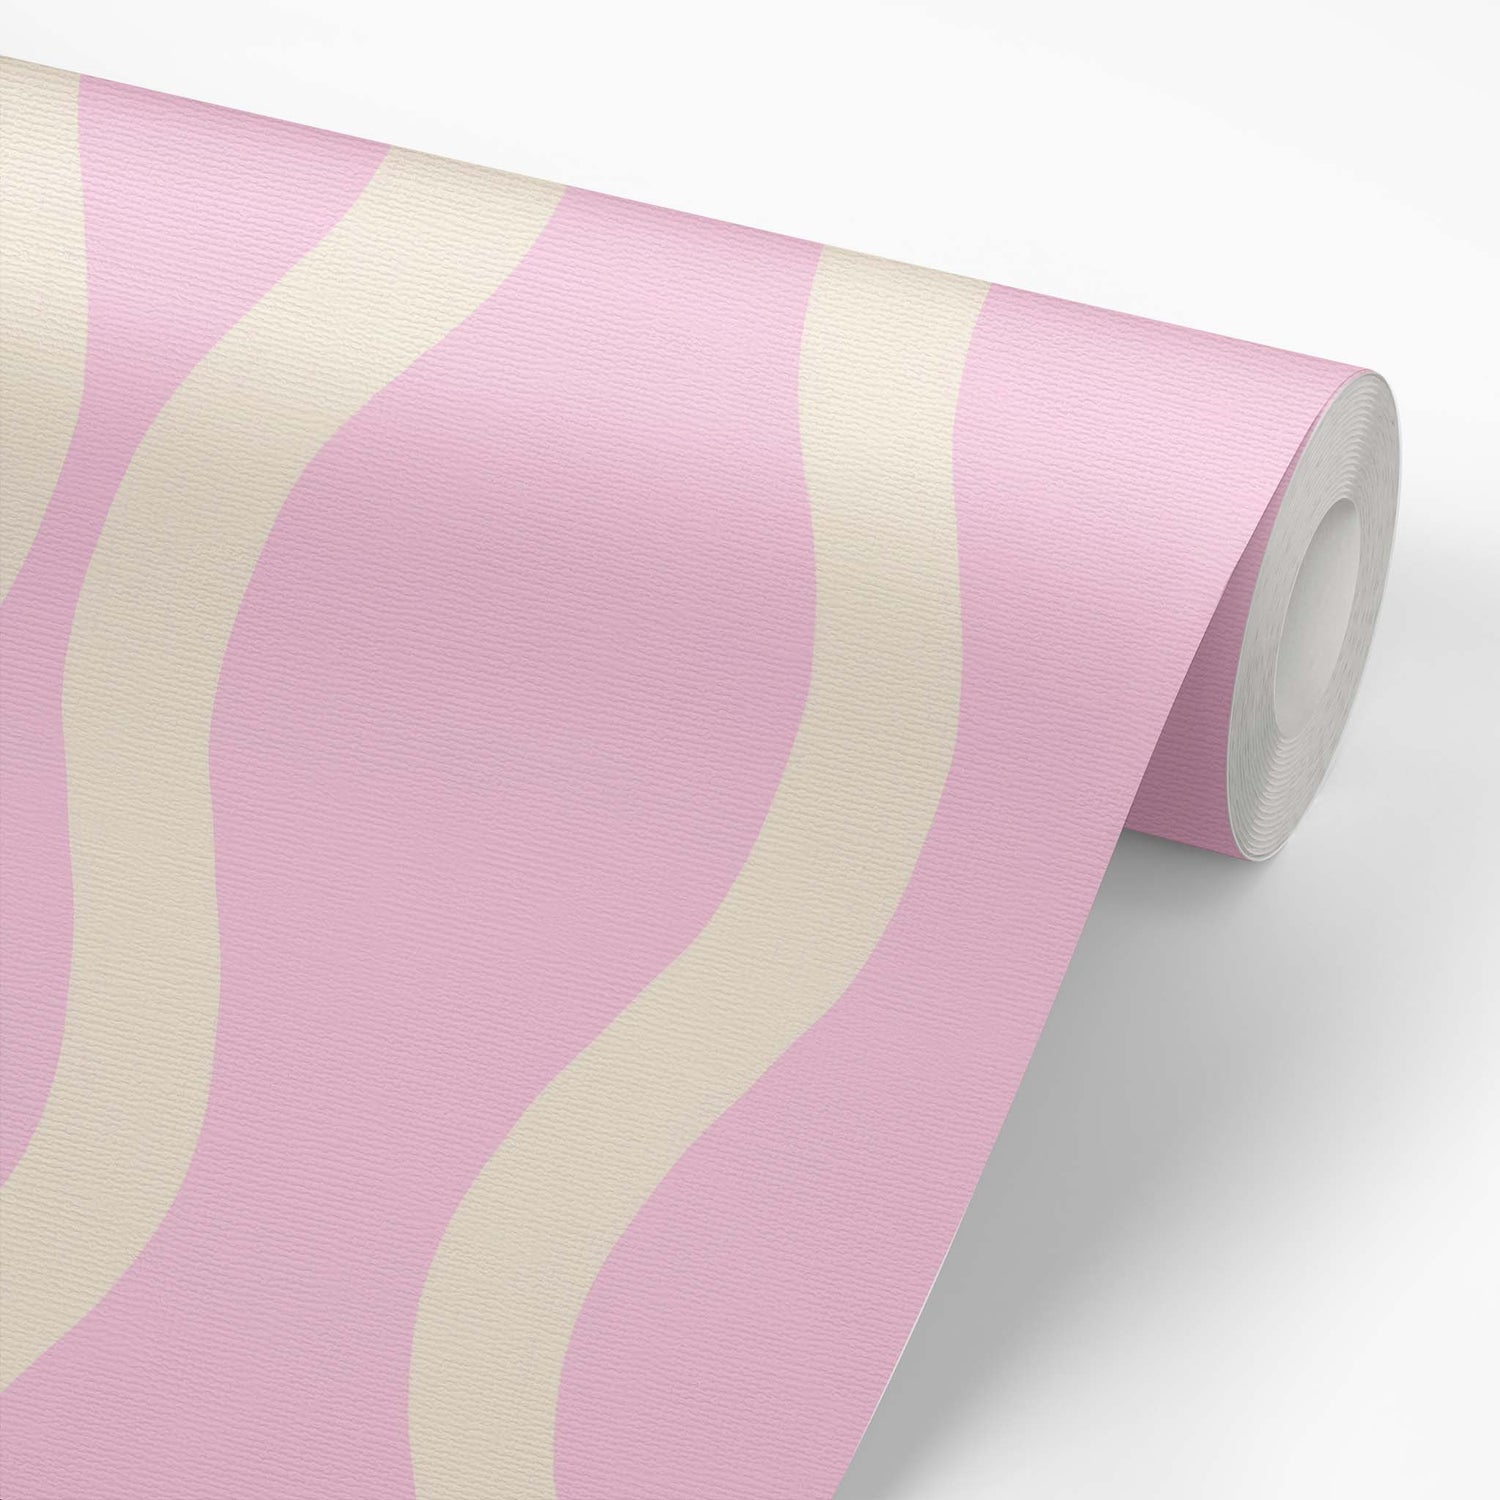 Wallpaper roll featuring Modern Wavy Lines Wallpaper in Bubblegum Pink by artist Brenda Bird for Ayara